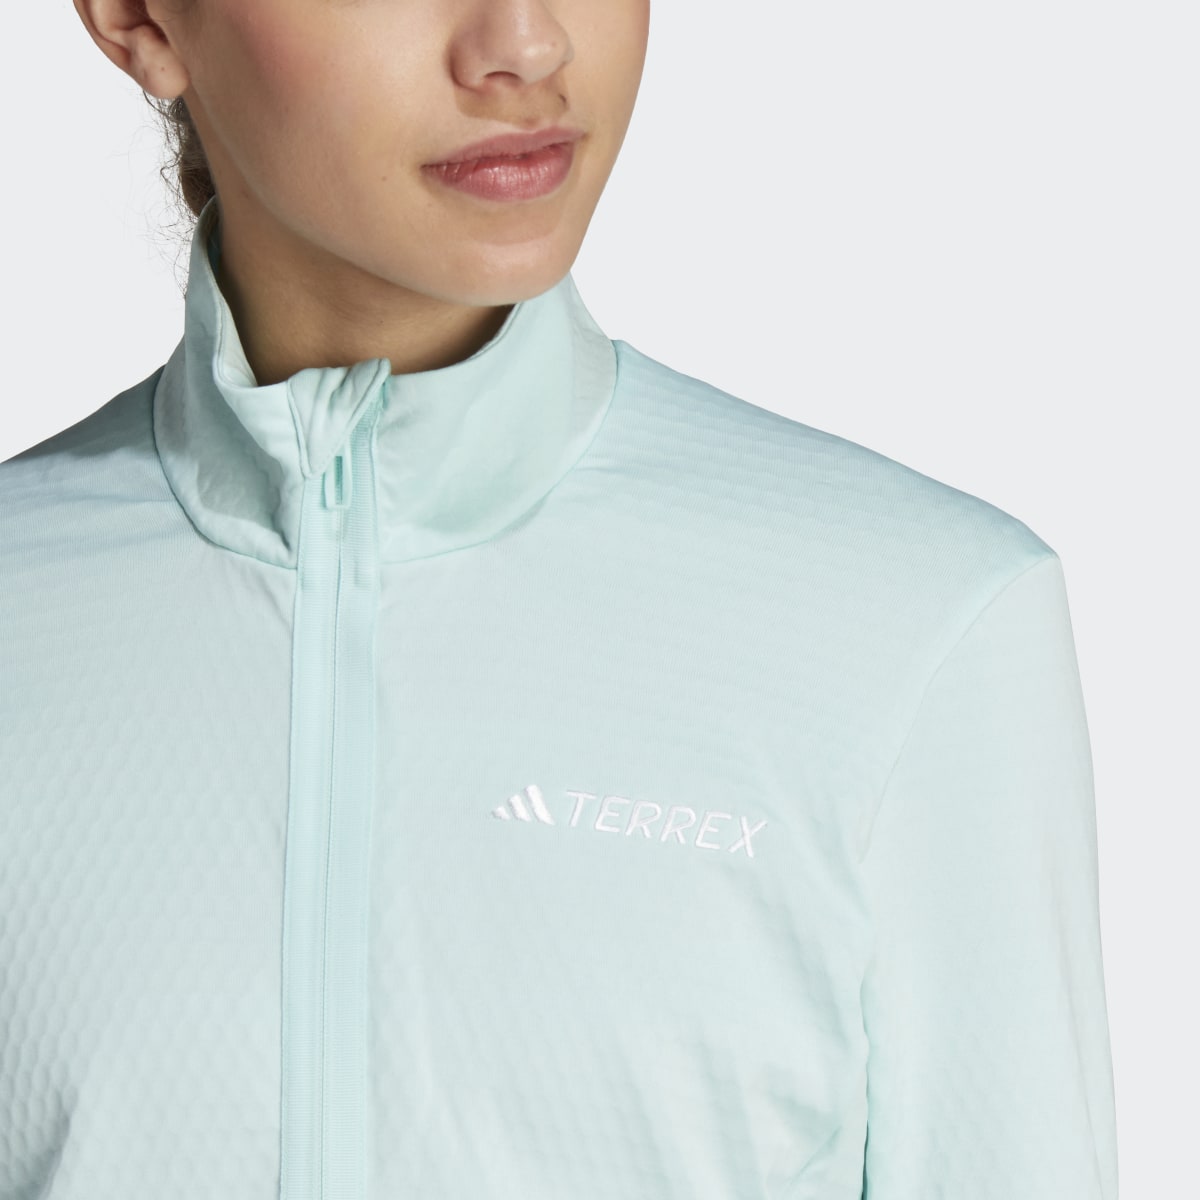 Adidas Terrex Multi Light Fleece Full-Zip Jacket. 6